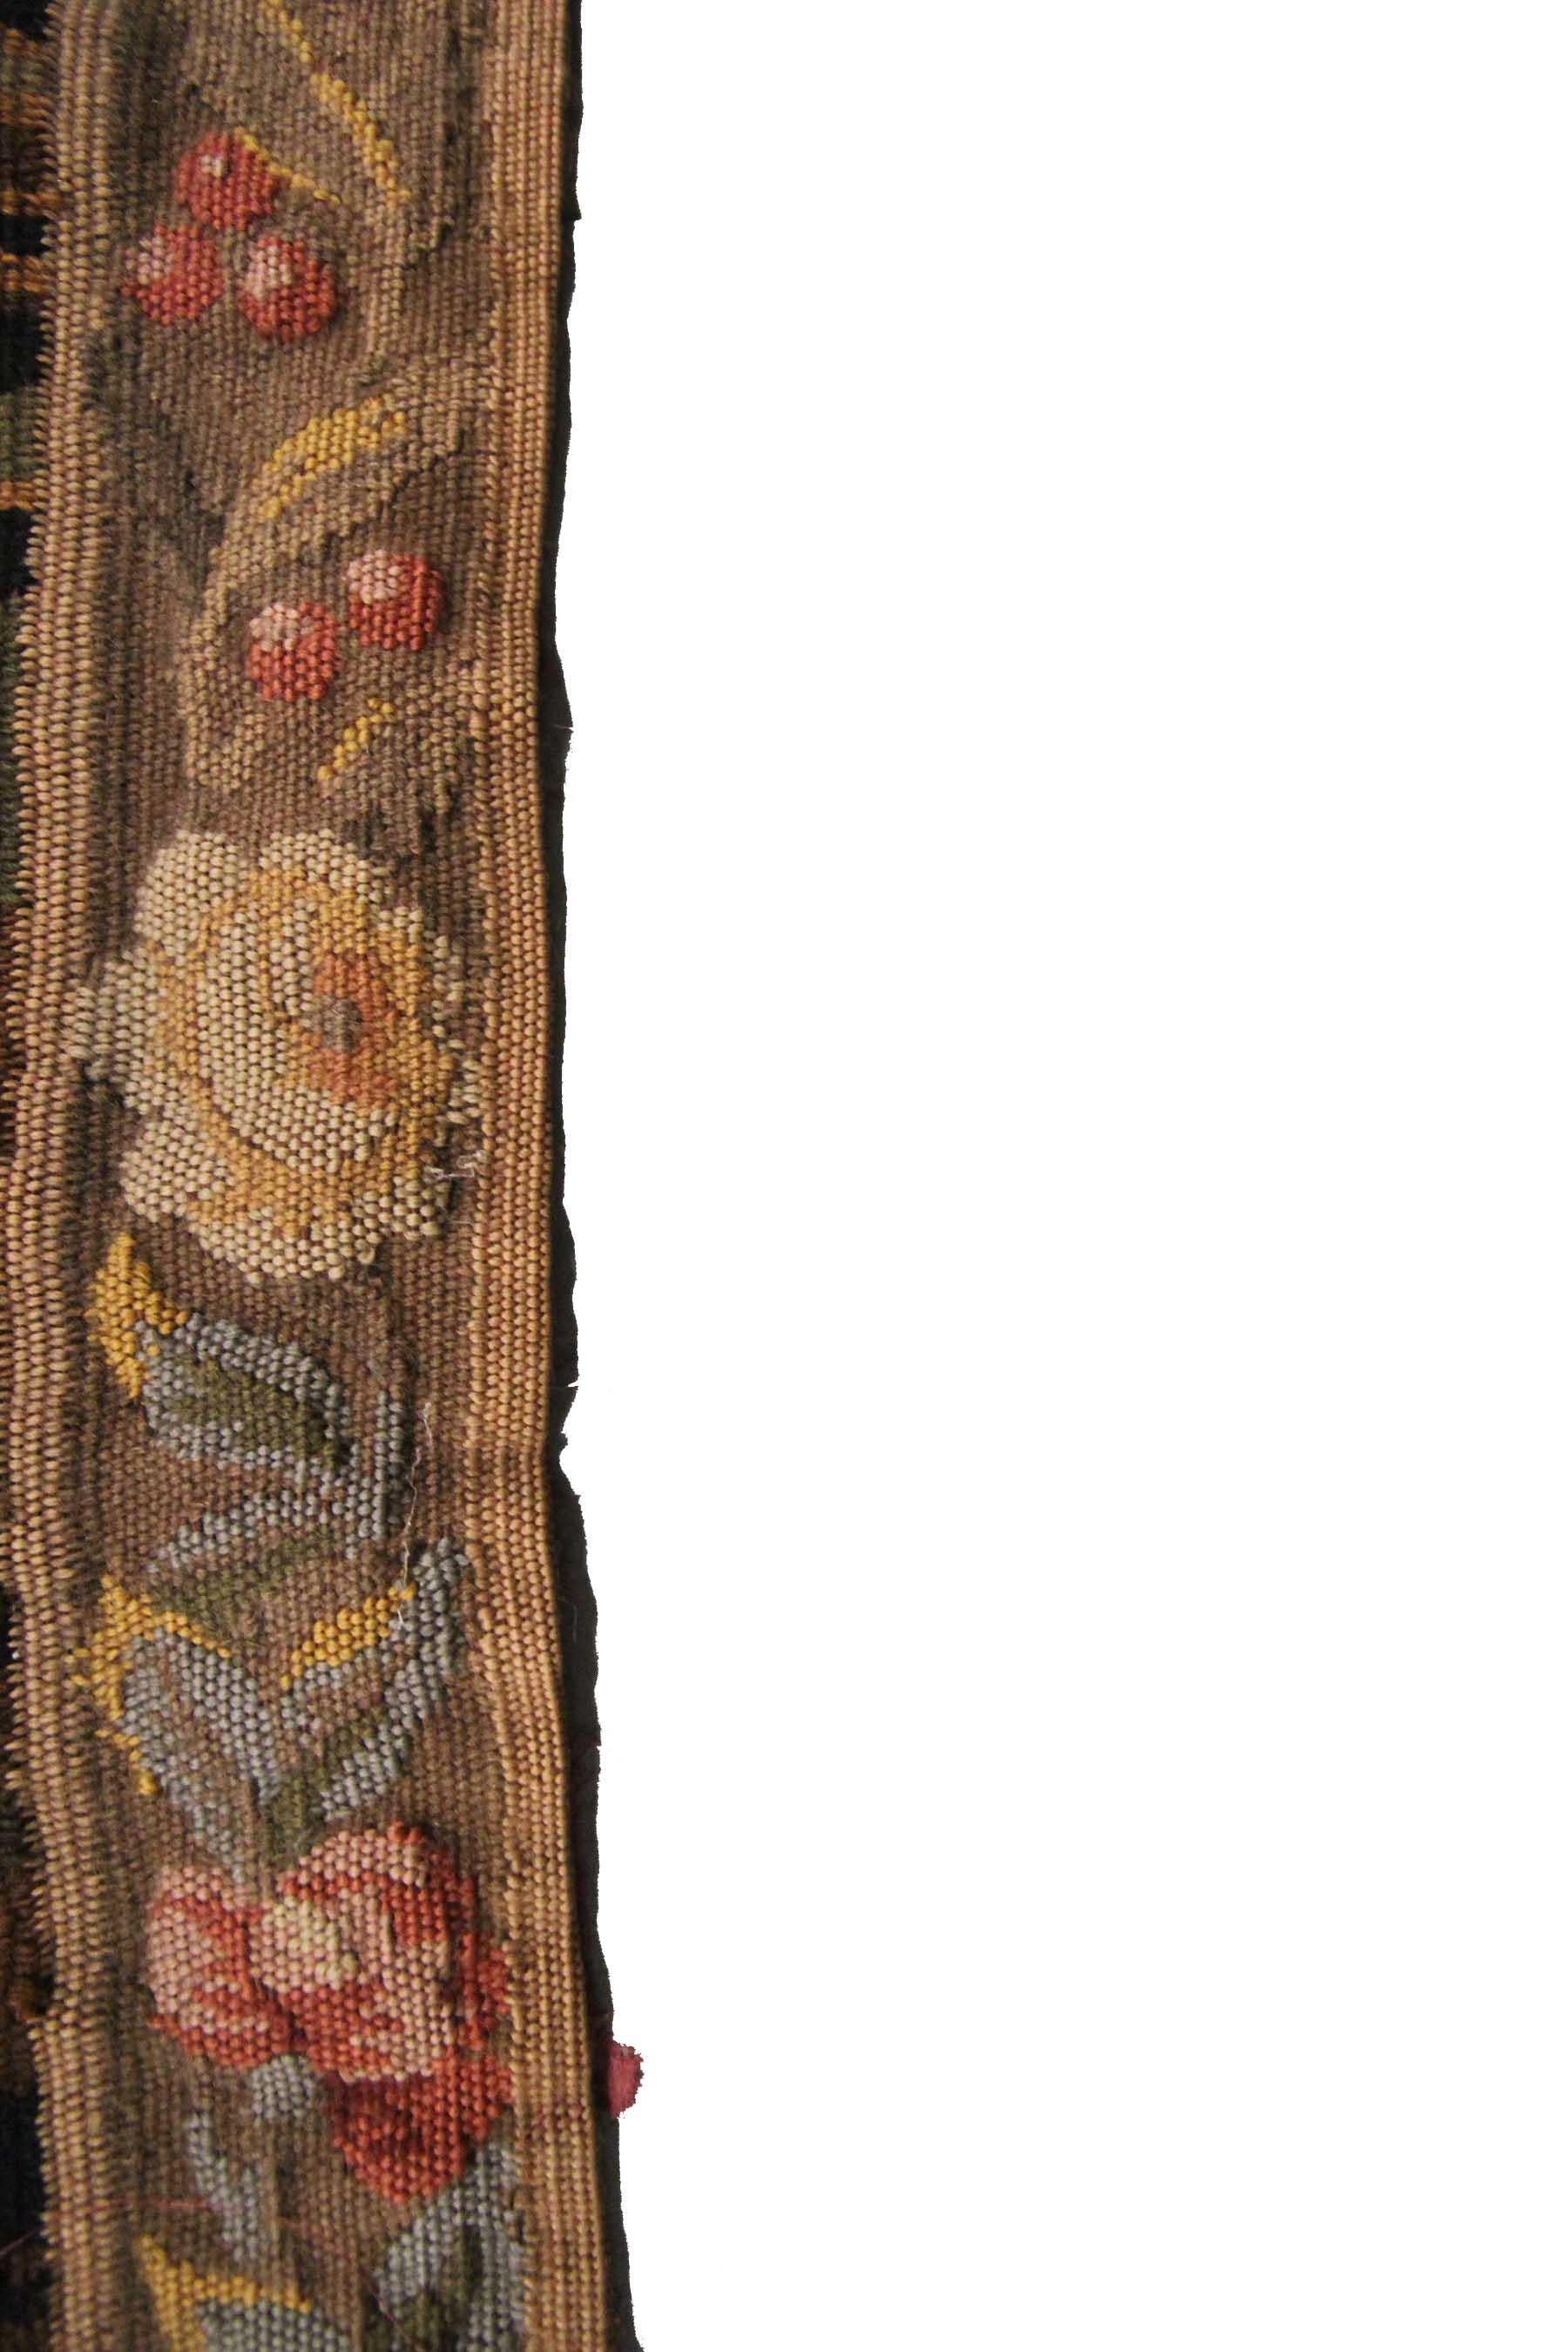 Laine Antiquities Verdure Tapisserie Large Handmade Tapestry Birds 3'4